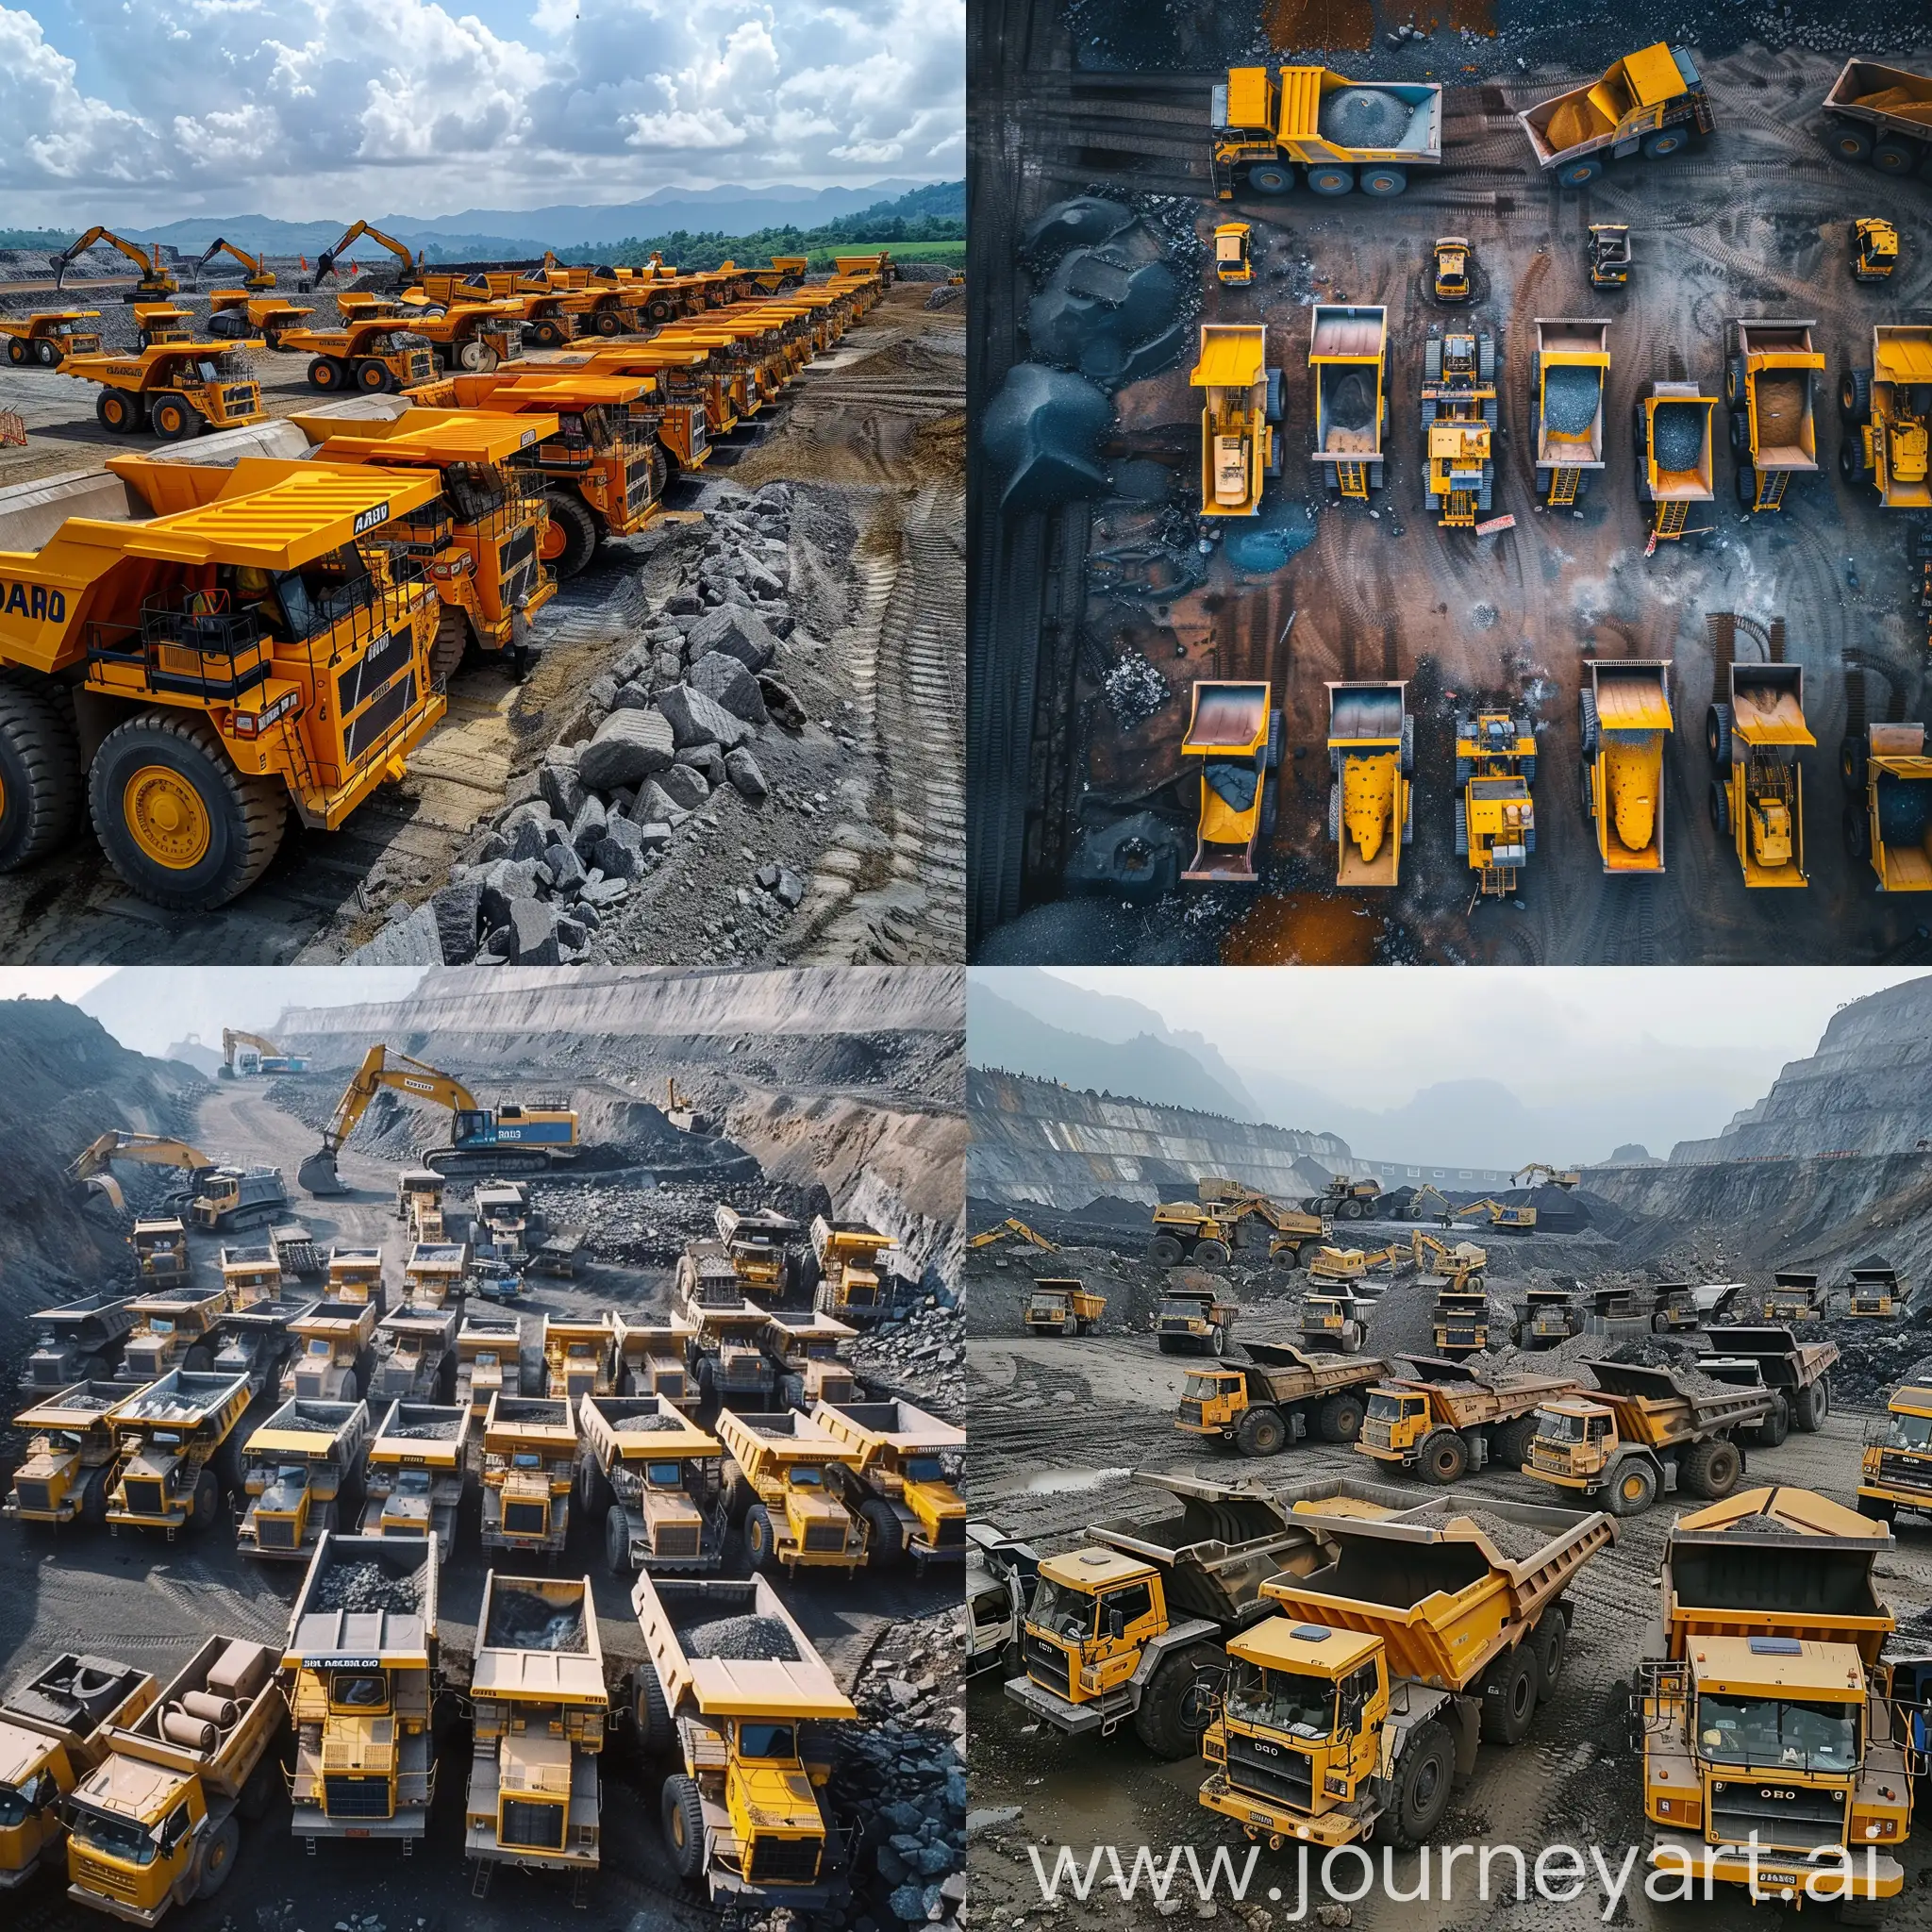 Adaro mining equipment parking